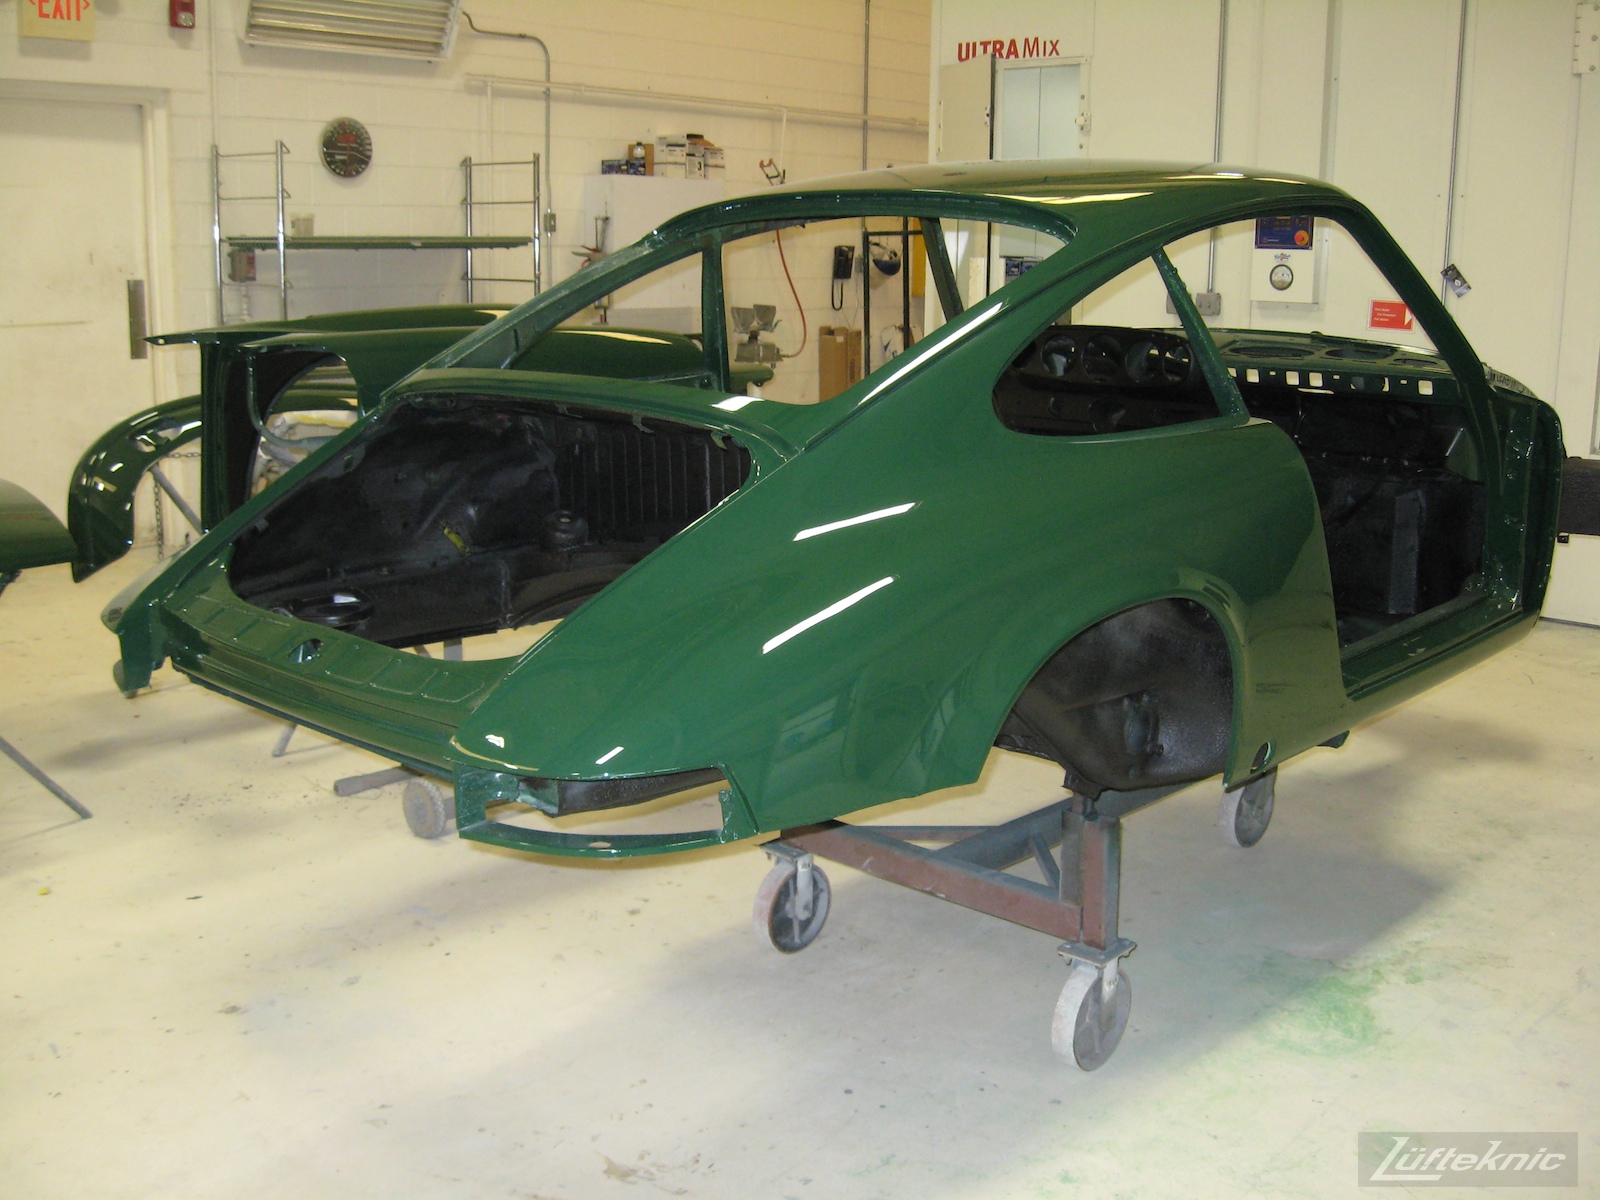 Freshly painted body shell of an Irish Green Porsche 912 undergoing restoration at Lufteknic.